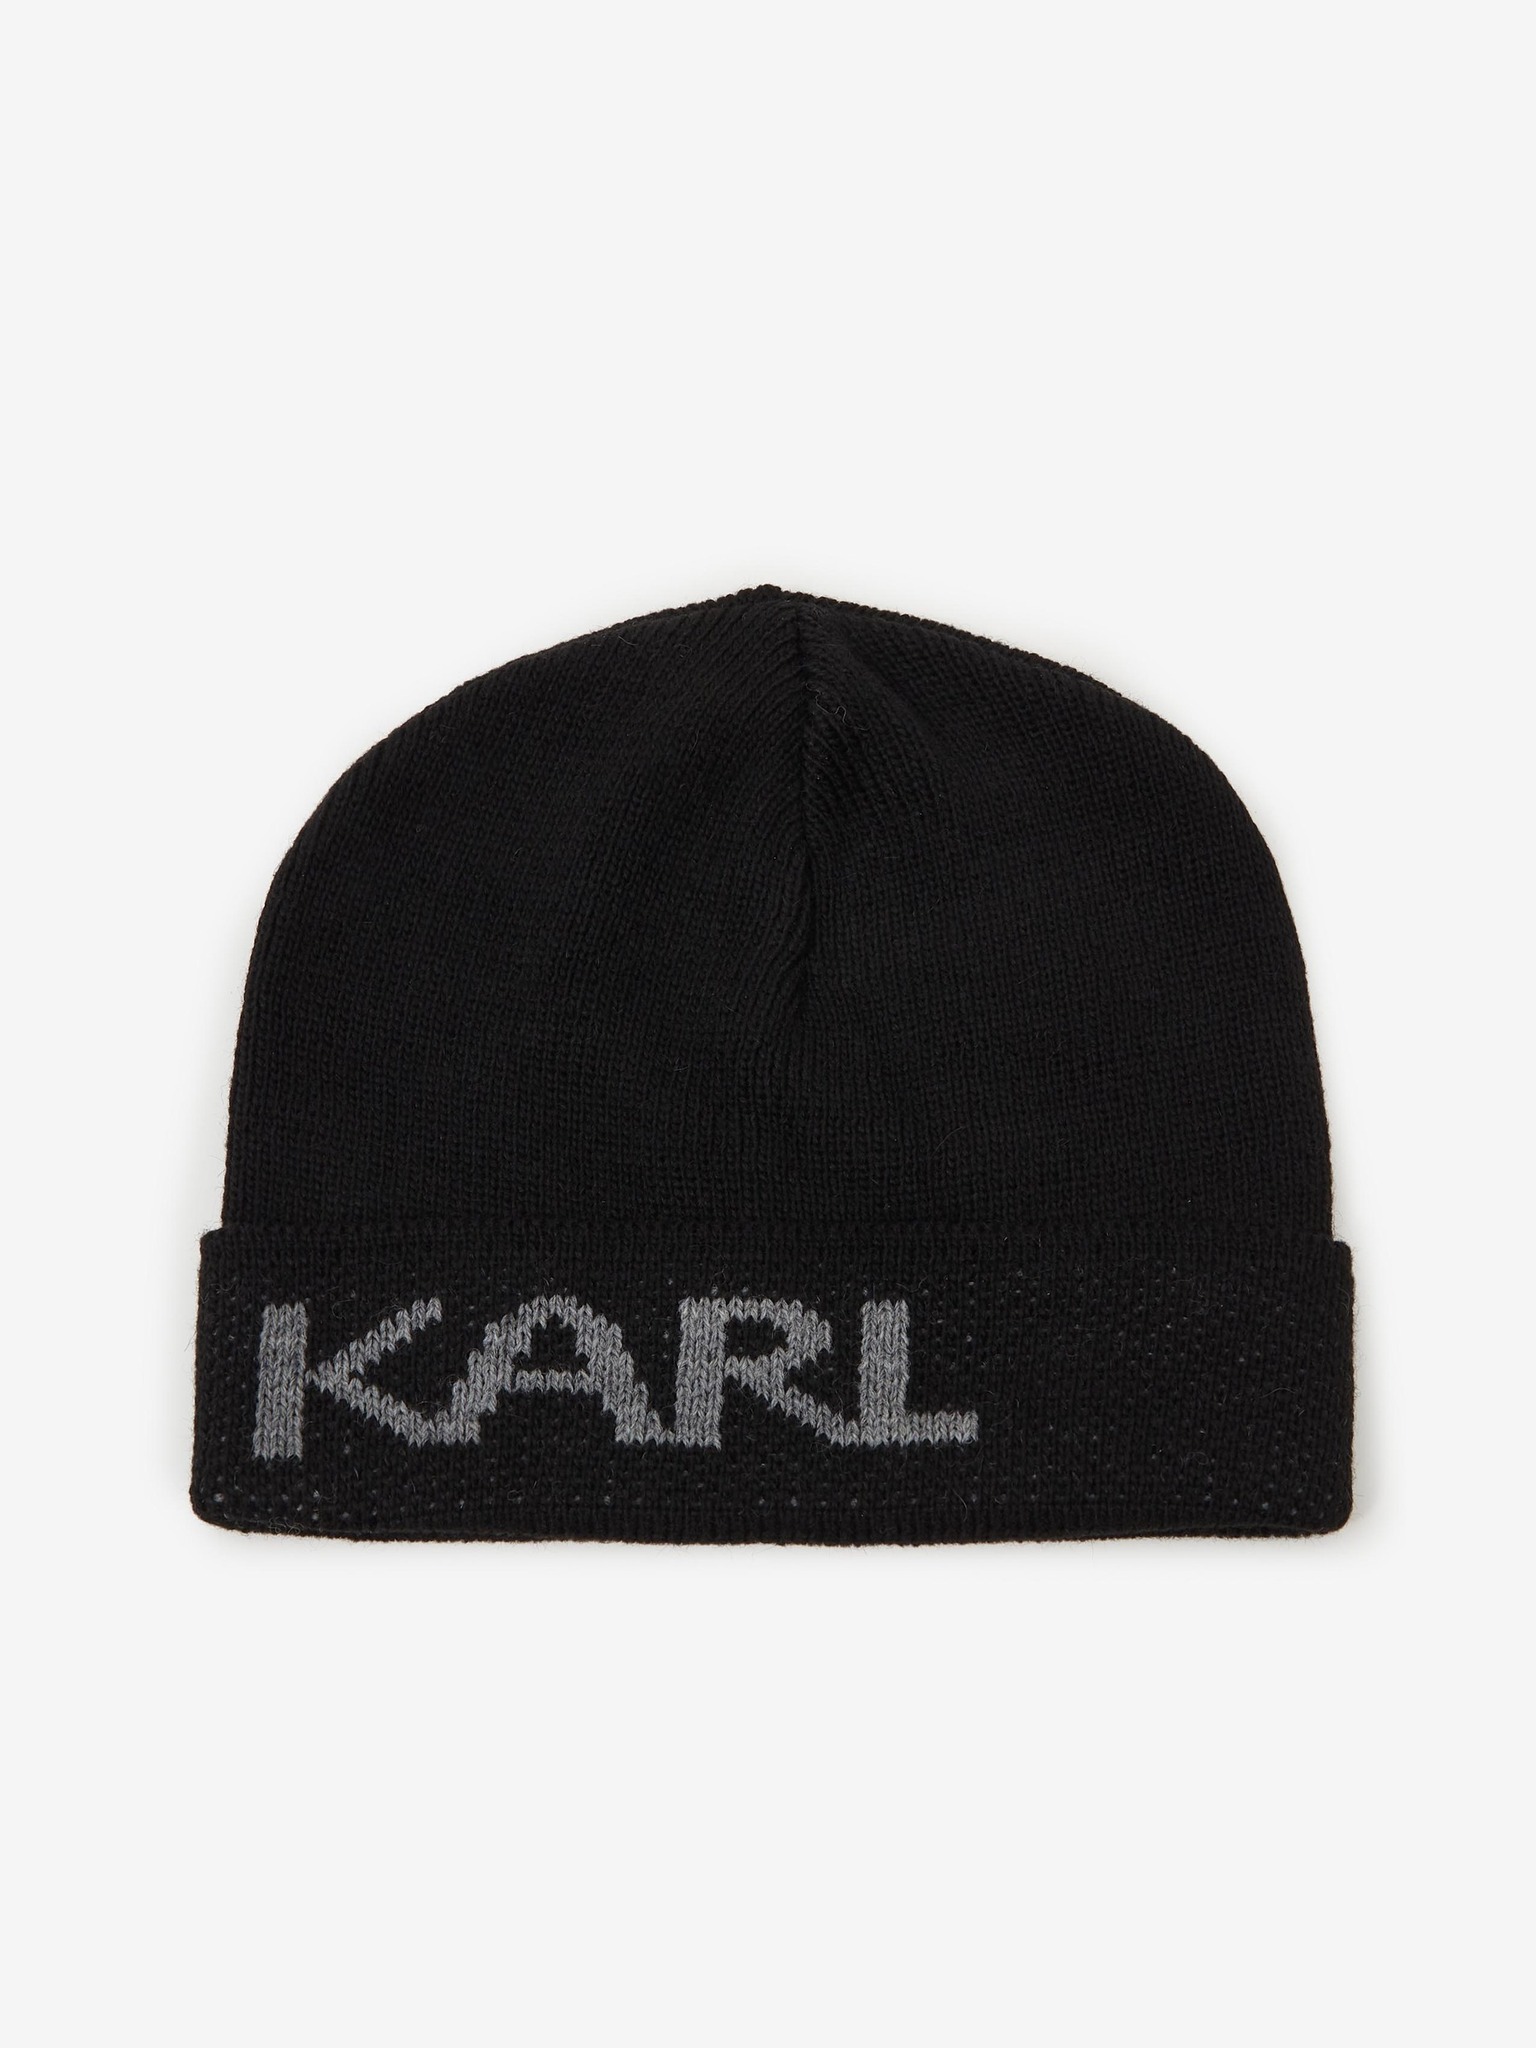 Čepice Karl Lagerfeld